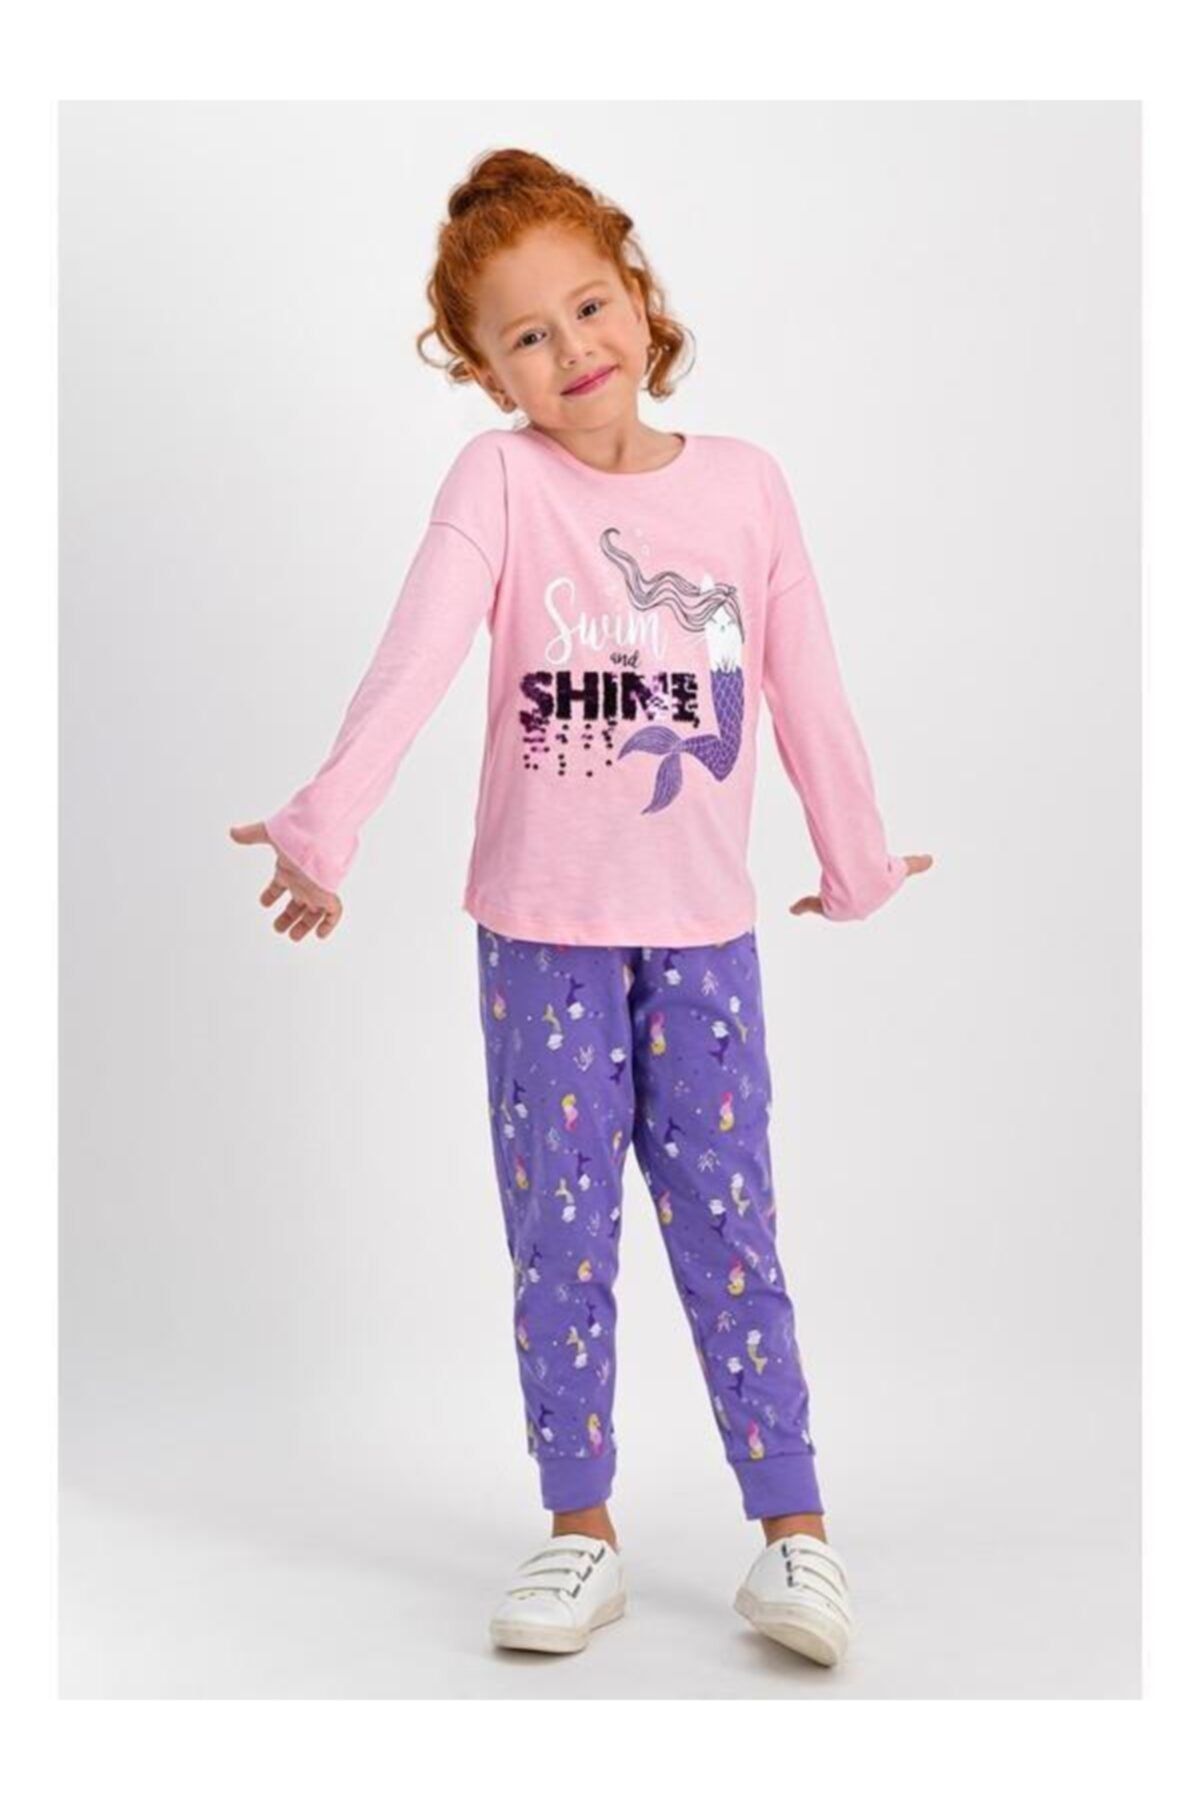 Rolypoly Swim Shine Açık Pembe Kız Çocuk Pijama Takımı Rp1742-1